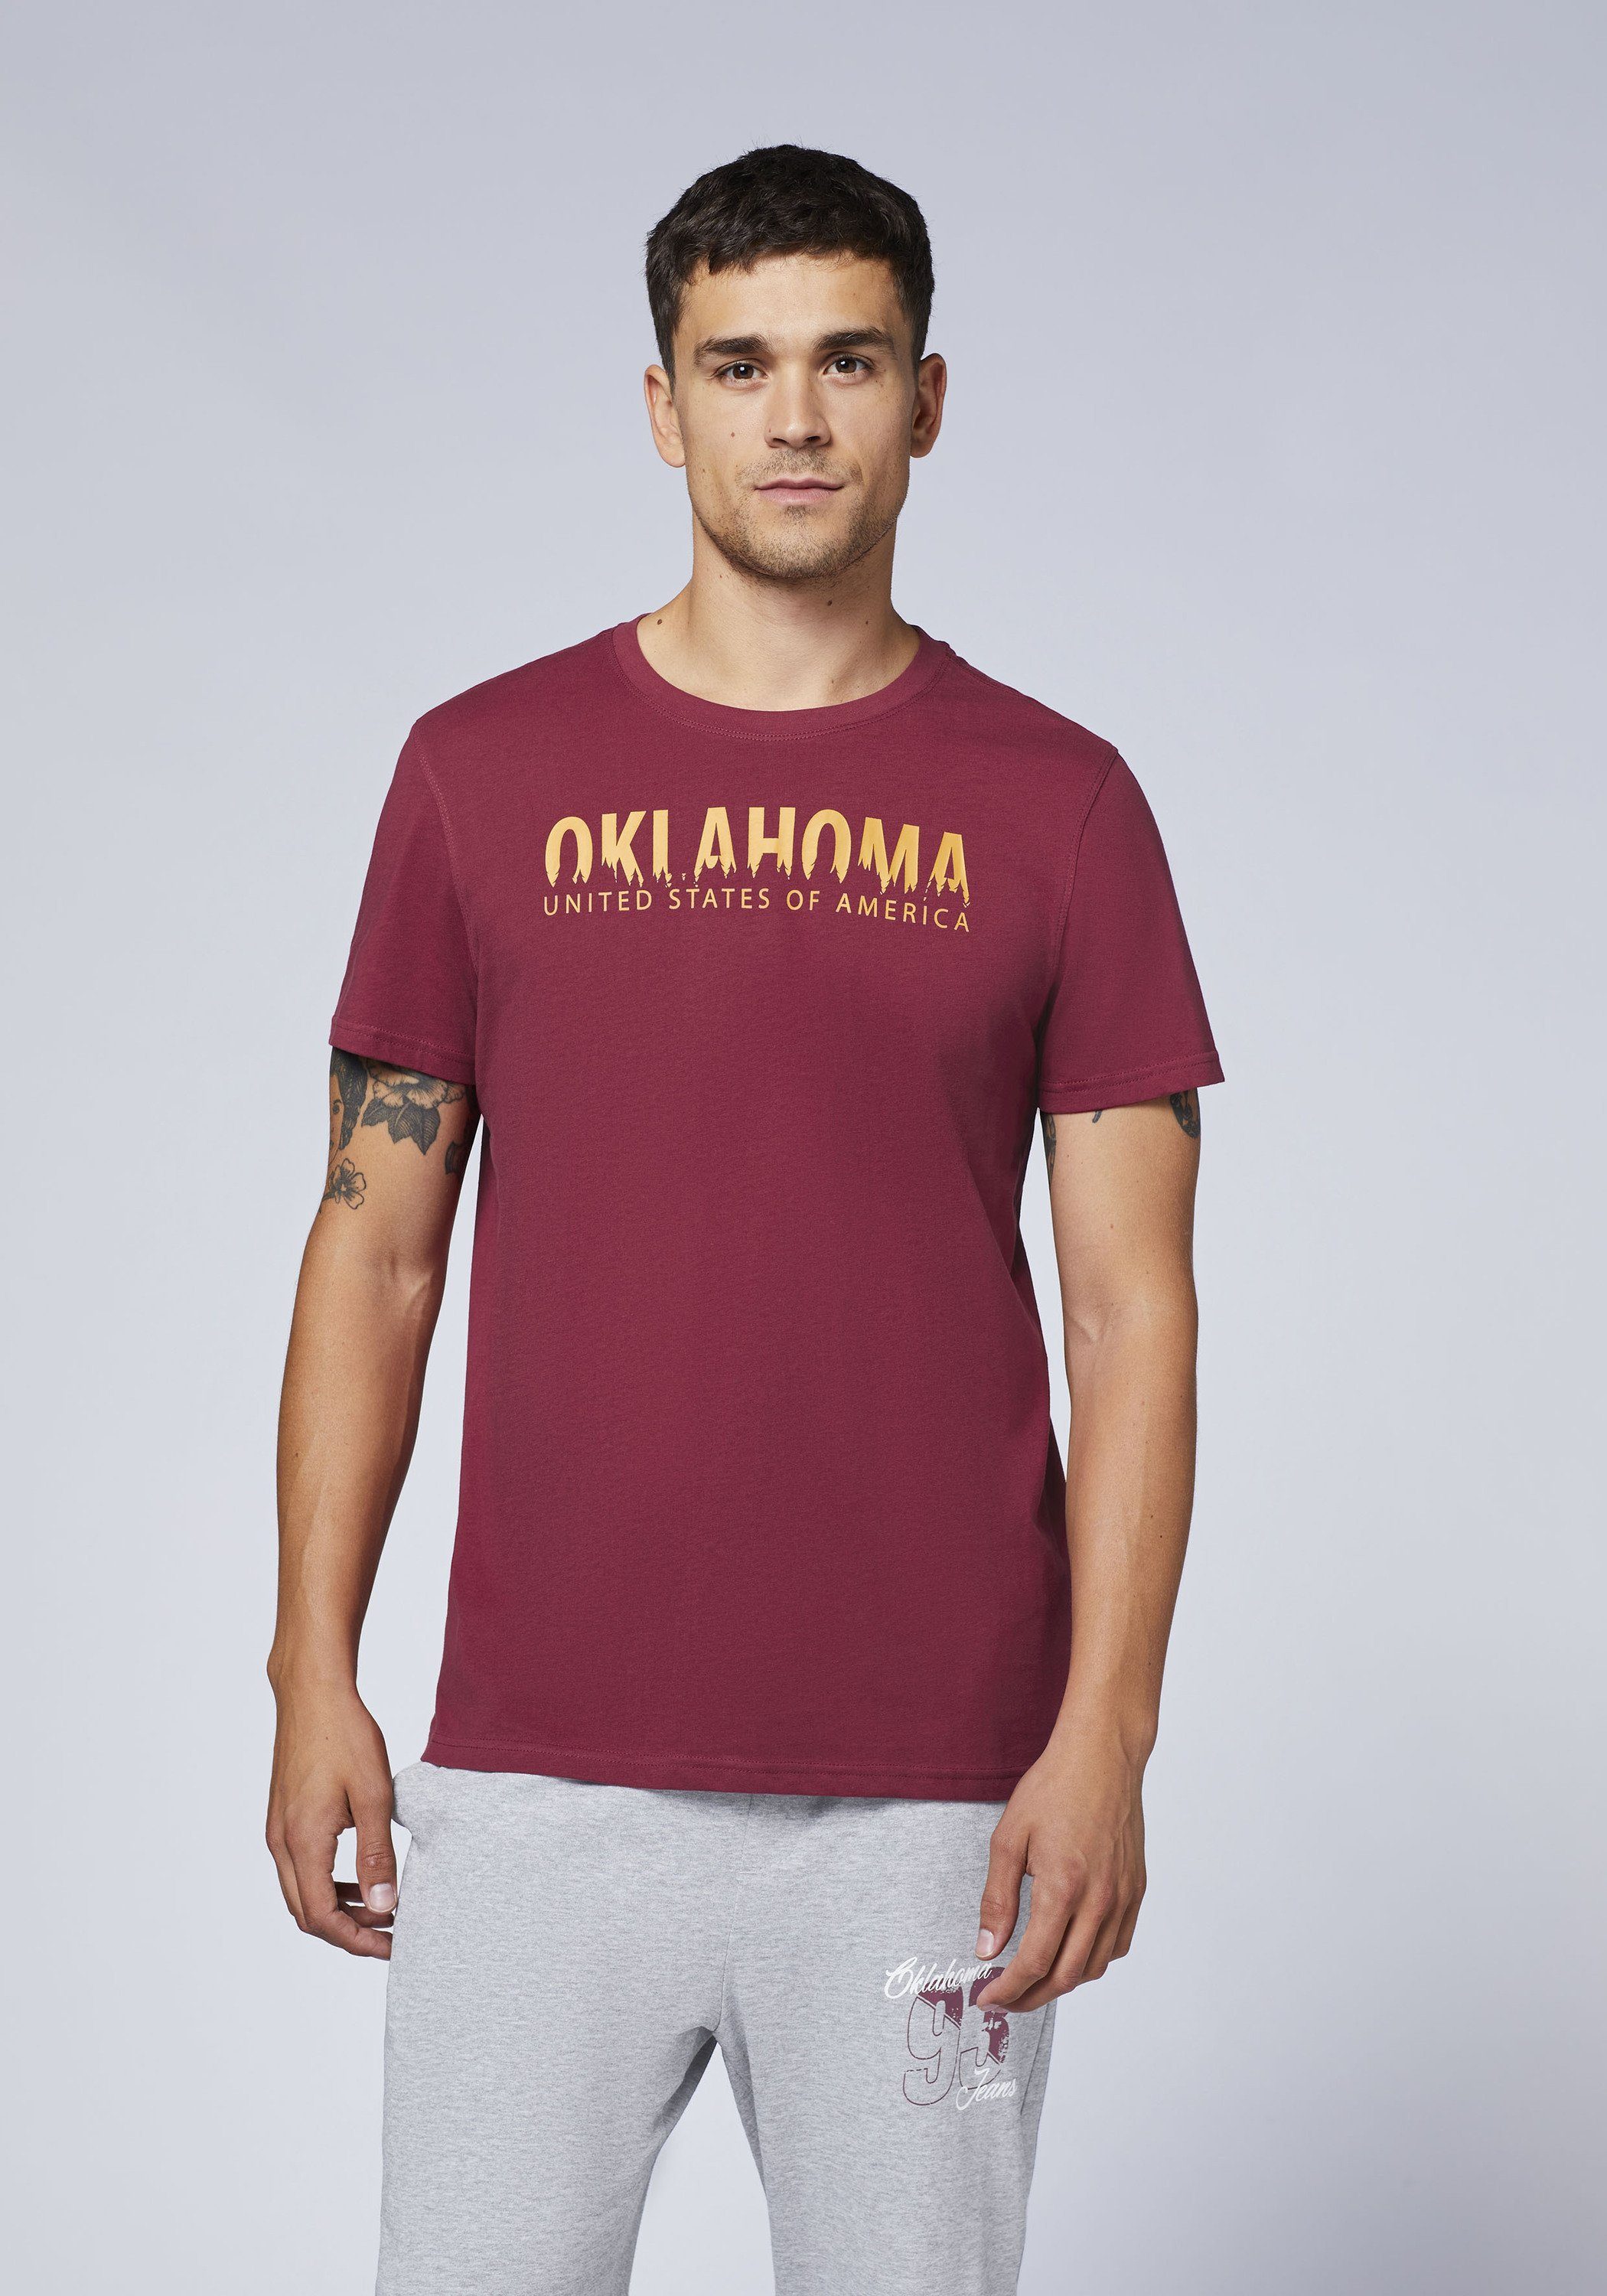 Oklahoma 19-1934 im Nature-Label-Look Tibetan Jeans Print-Shirt Red